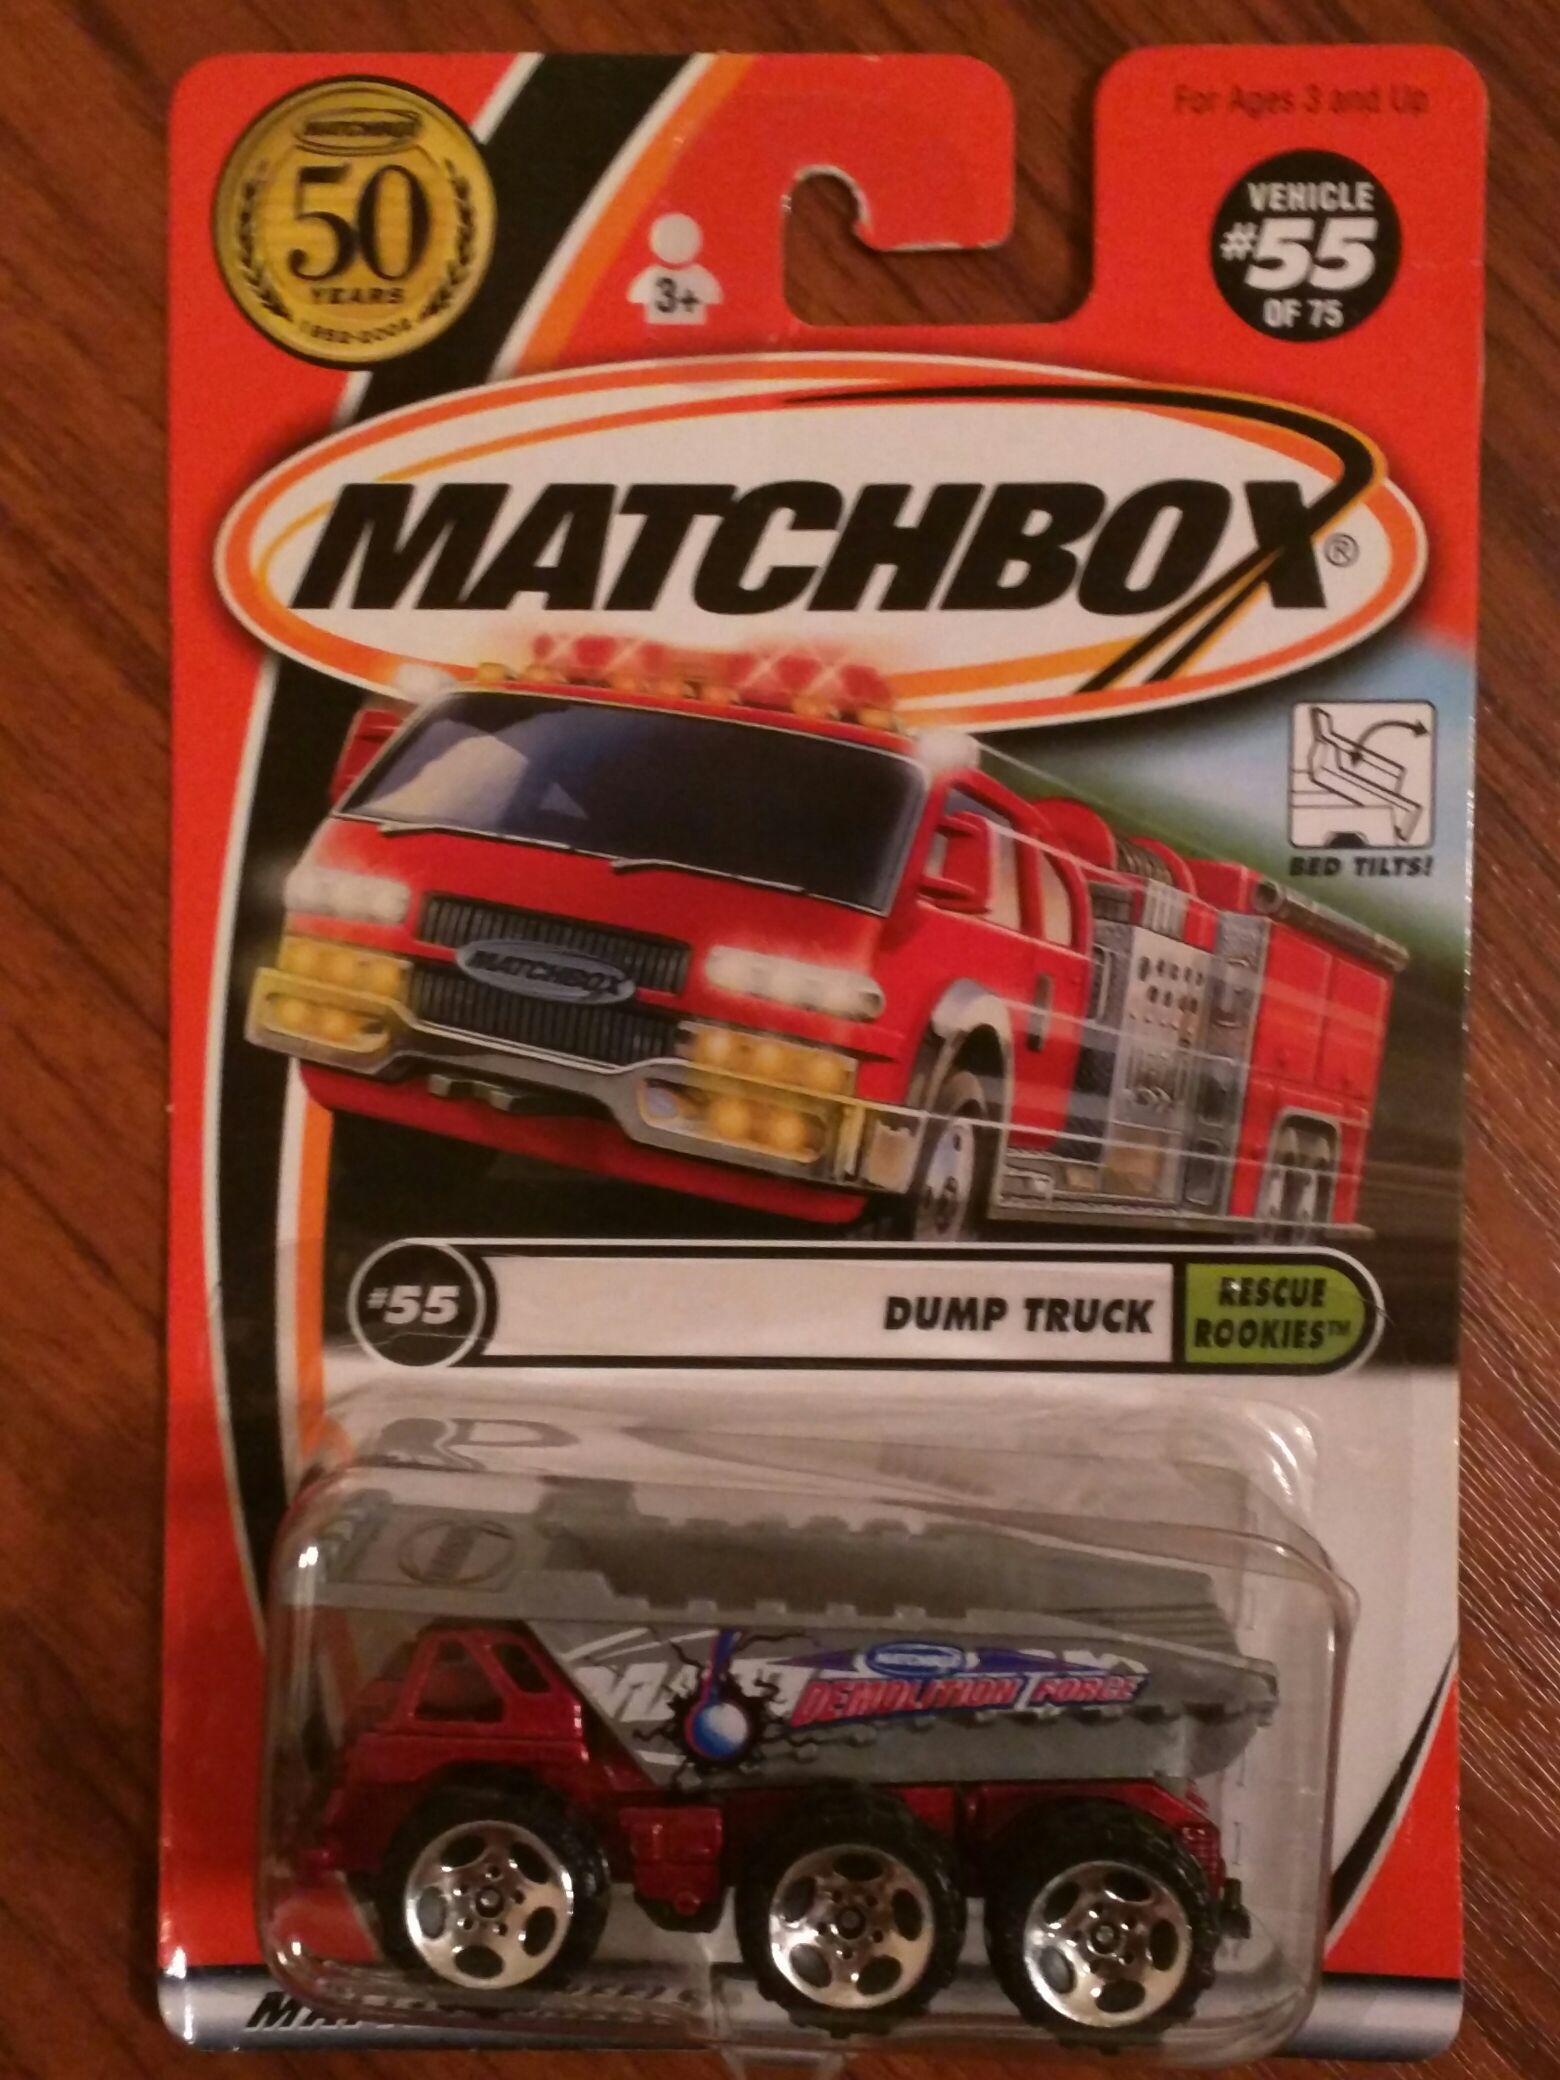 Matchbix Dump Truck - Heroic Vehicles Series toy car collectible - Main Image 1